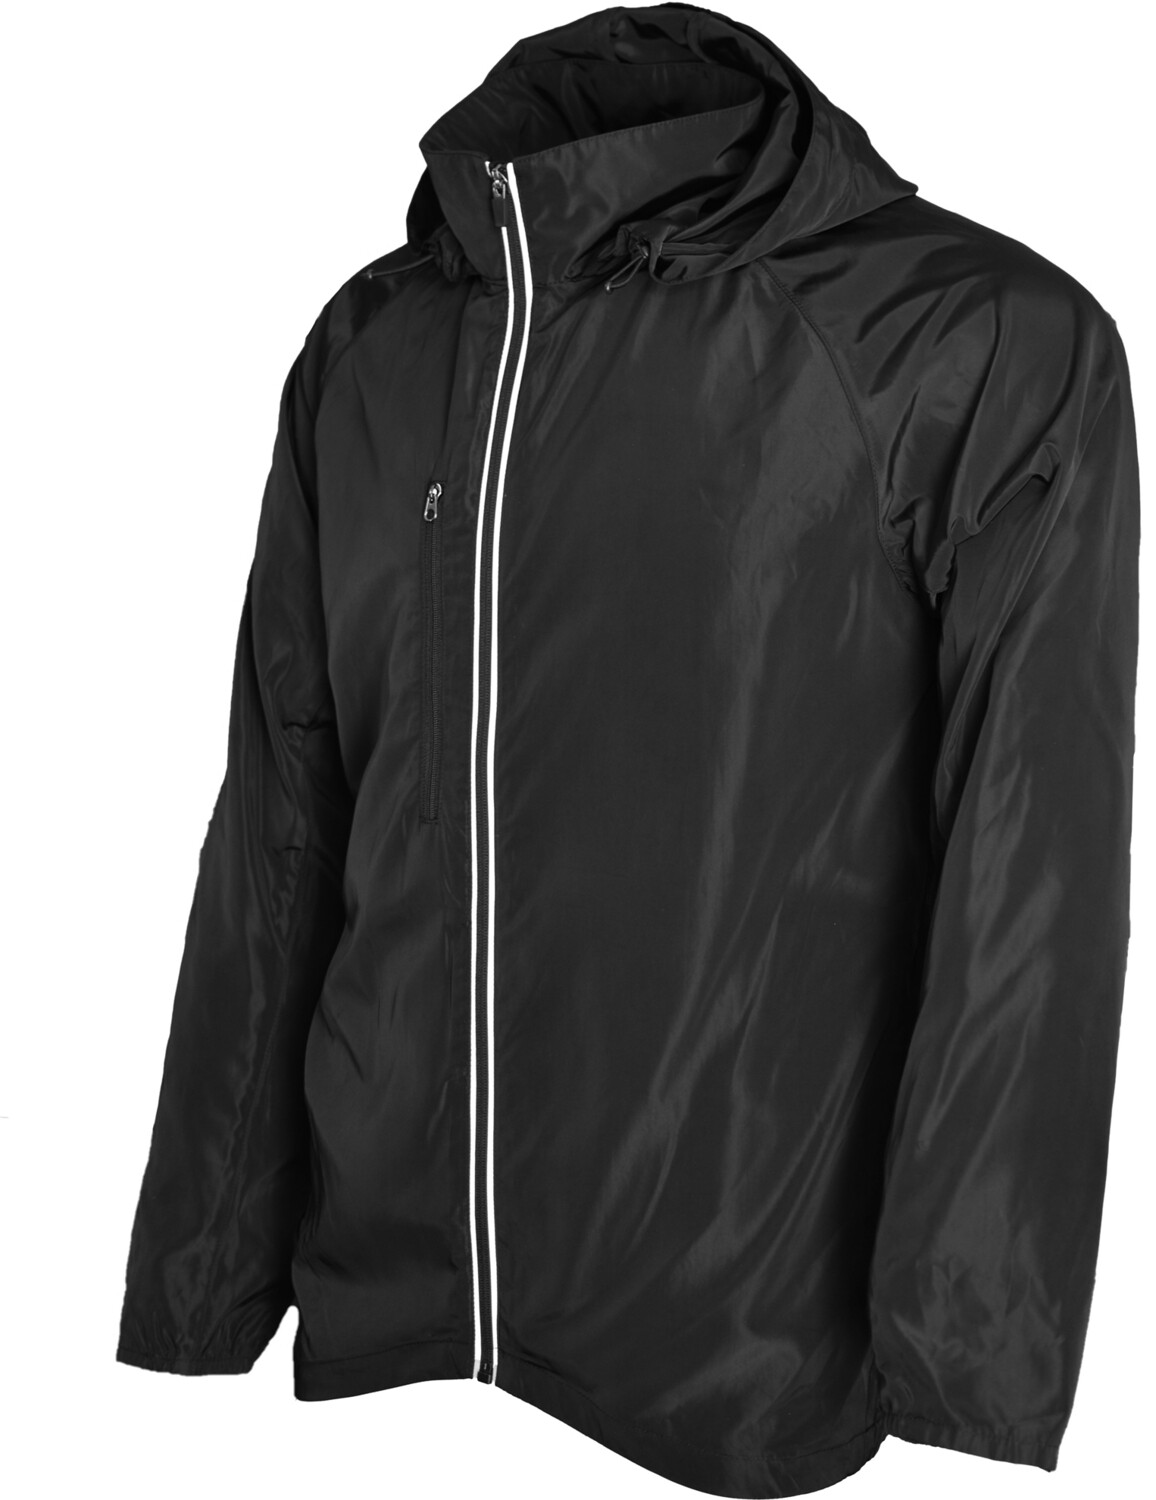 RJX Activ Men's Packable Jacket - Black